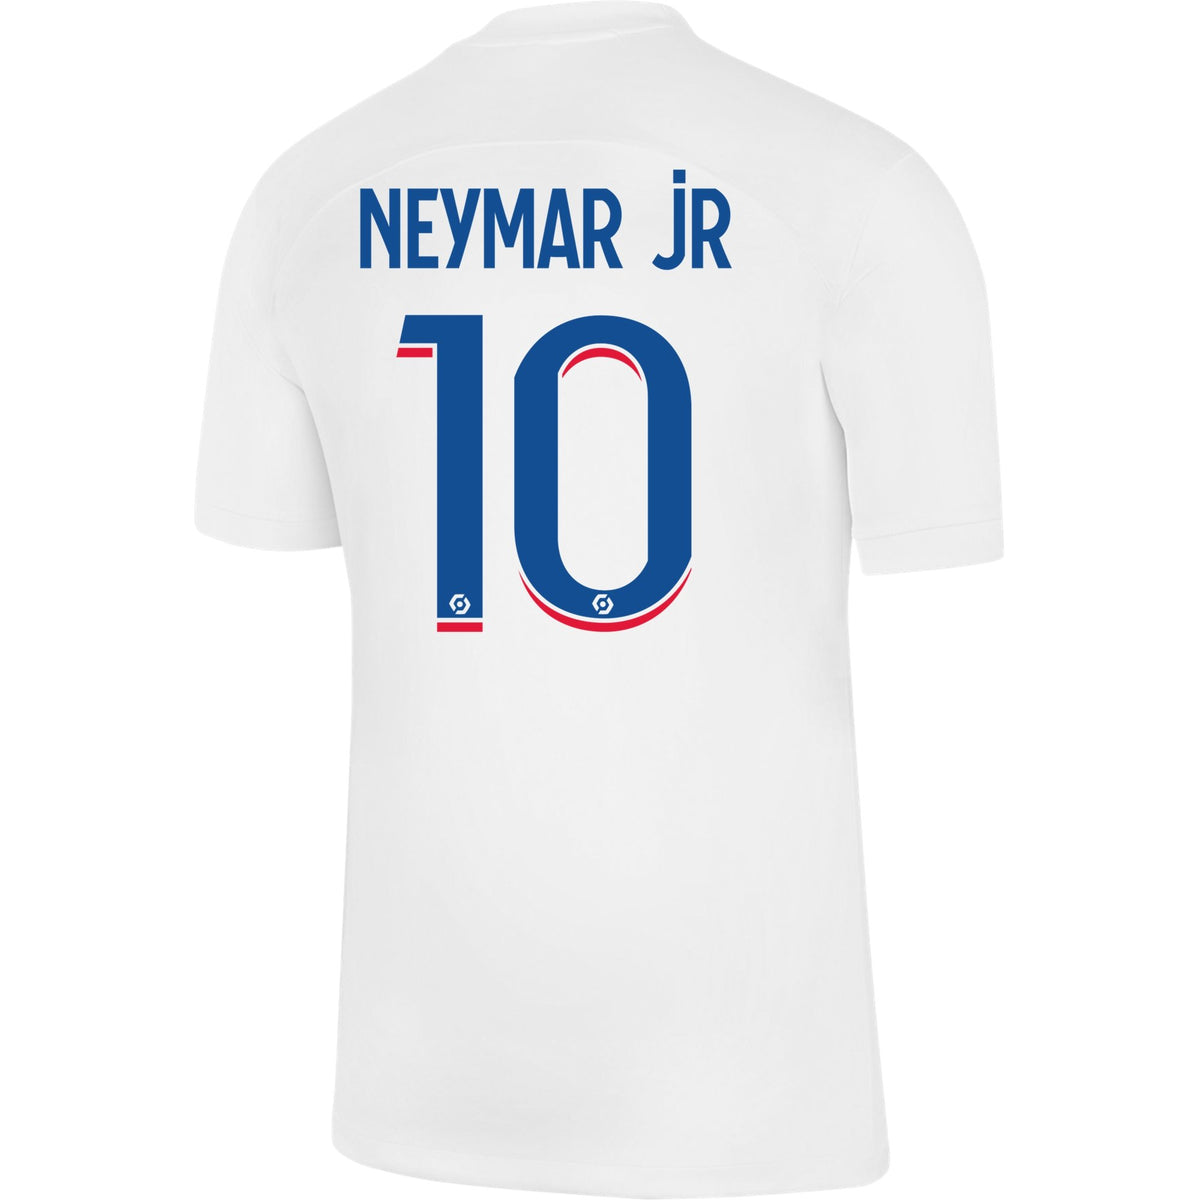 Men's Replica Nike Neymar Jr Paris Saint-Germain Home Jersey 22/23